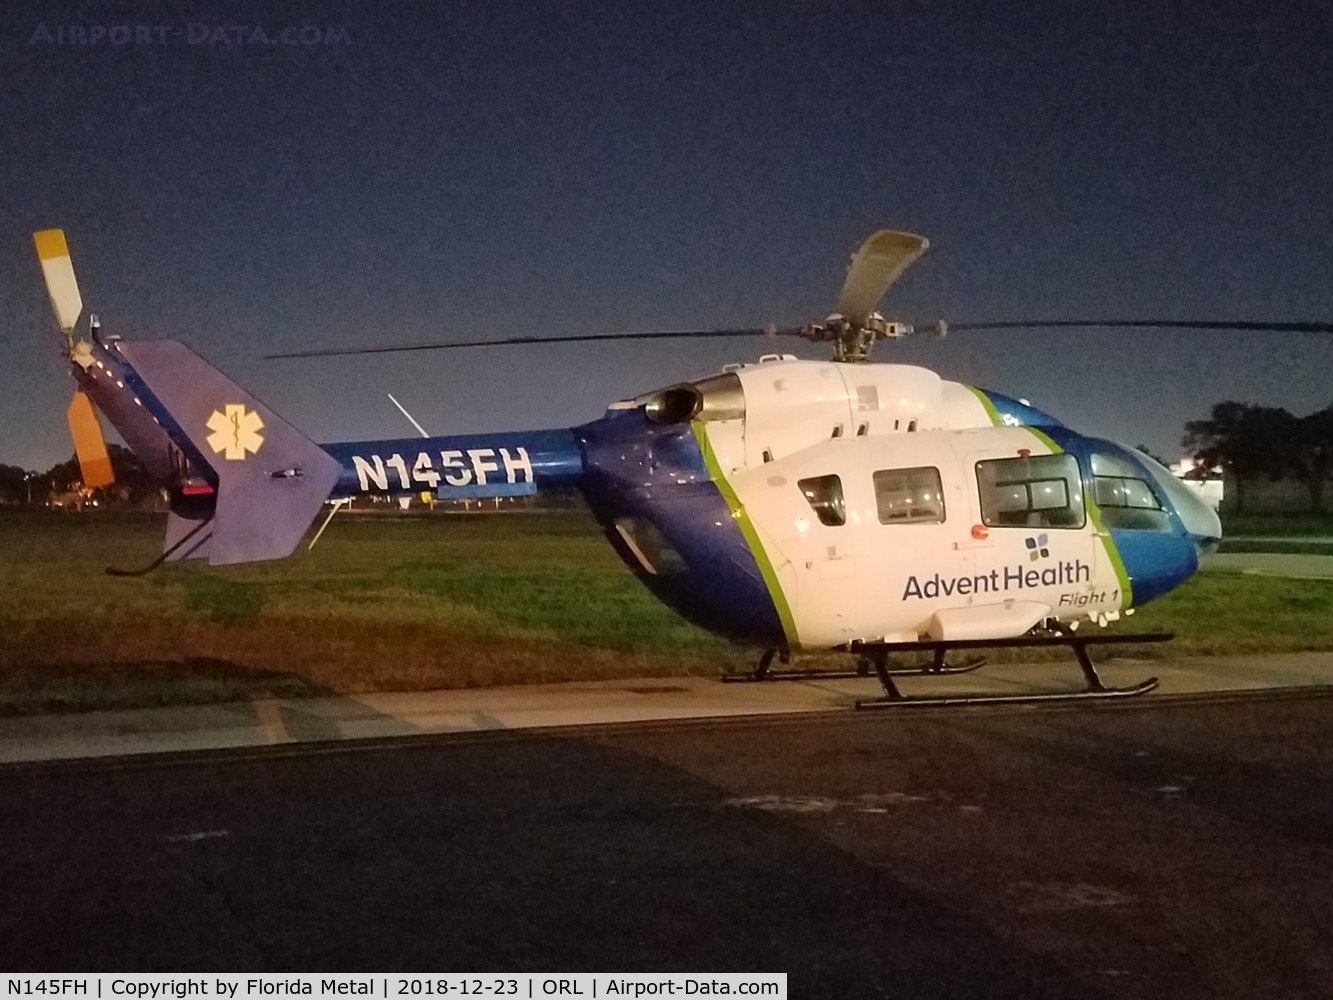 N145FH, 2004 Eurocopter-Kawasaki EC-145 (BK-117C-2) C/N 9047, Was Florida Hospital, now Advent Health